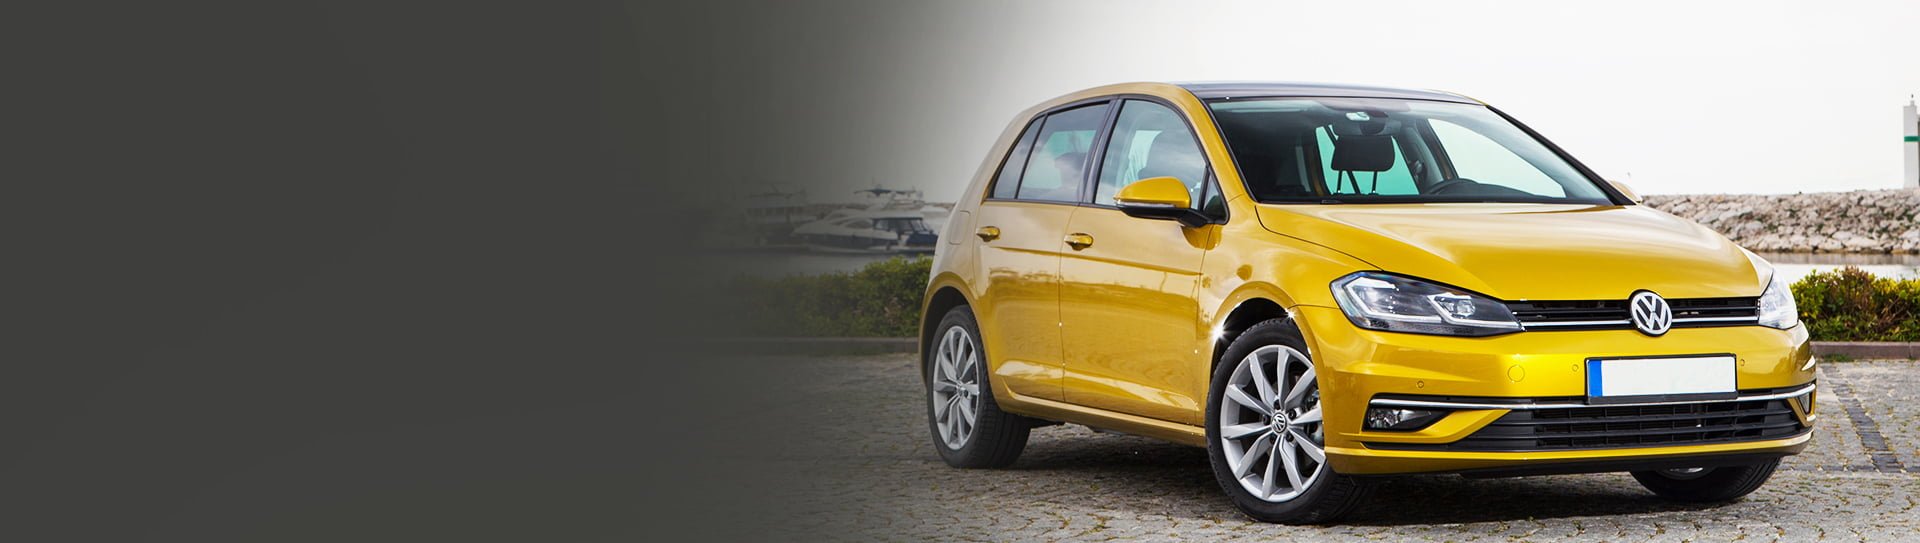 Volkswagen - leasing samochodu osobowego